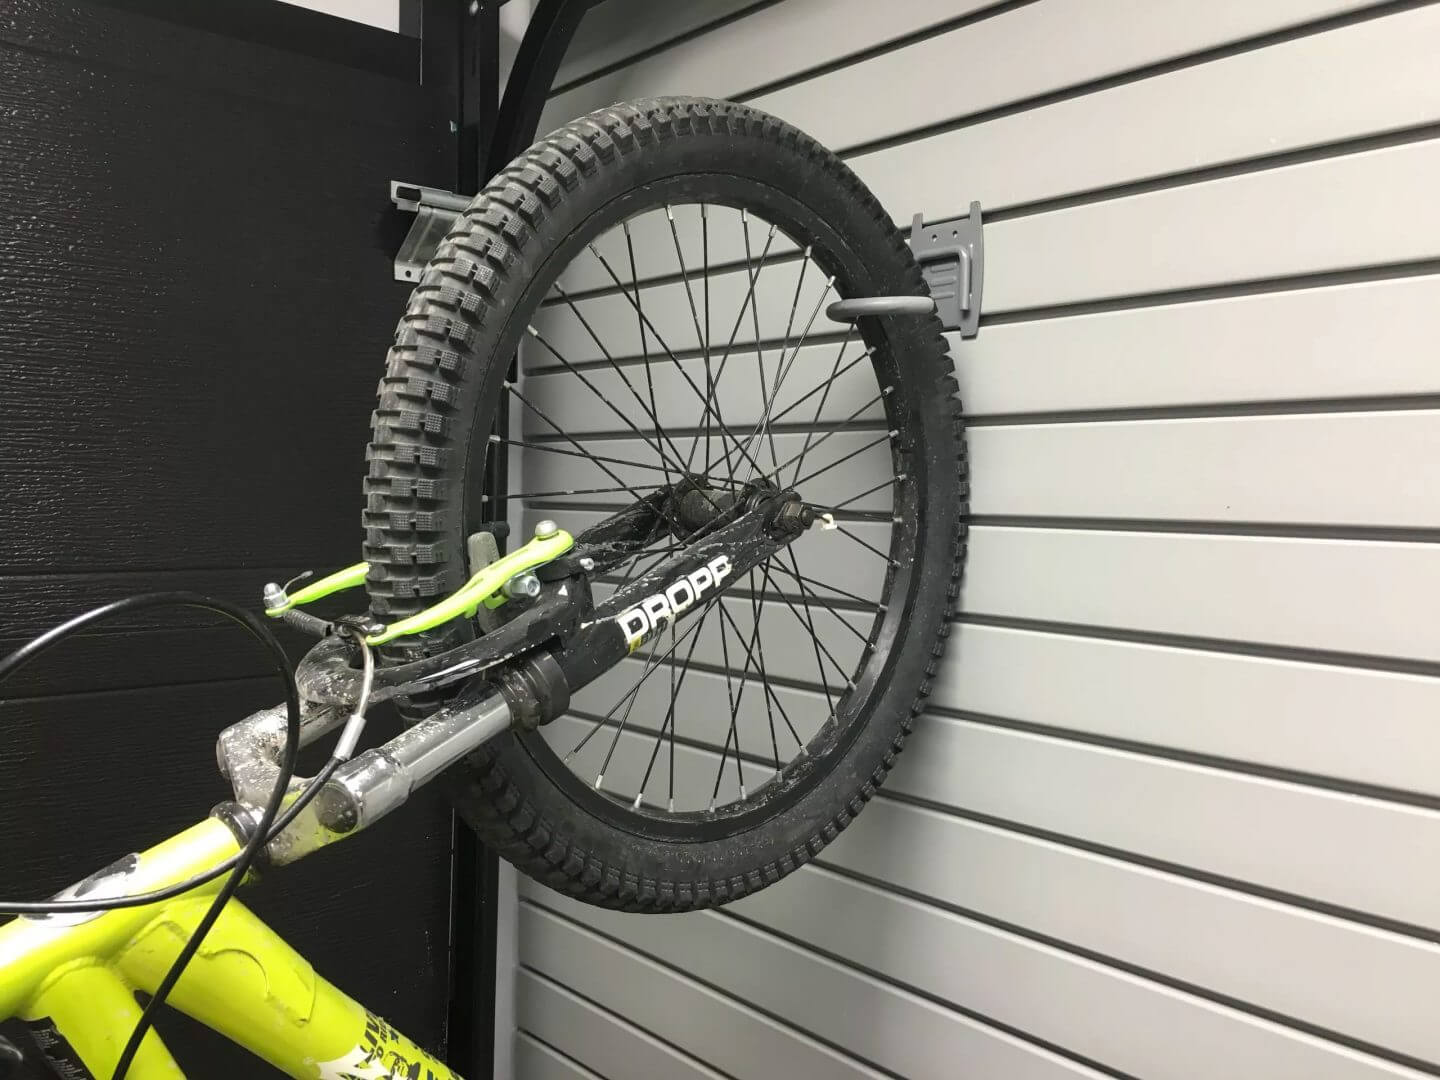 ZG-Wall Garage Storage System showcasing the durable bike hook